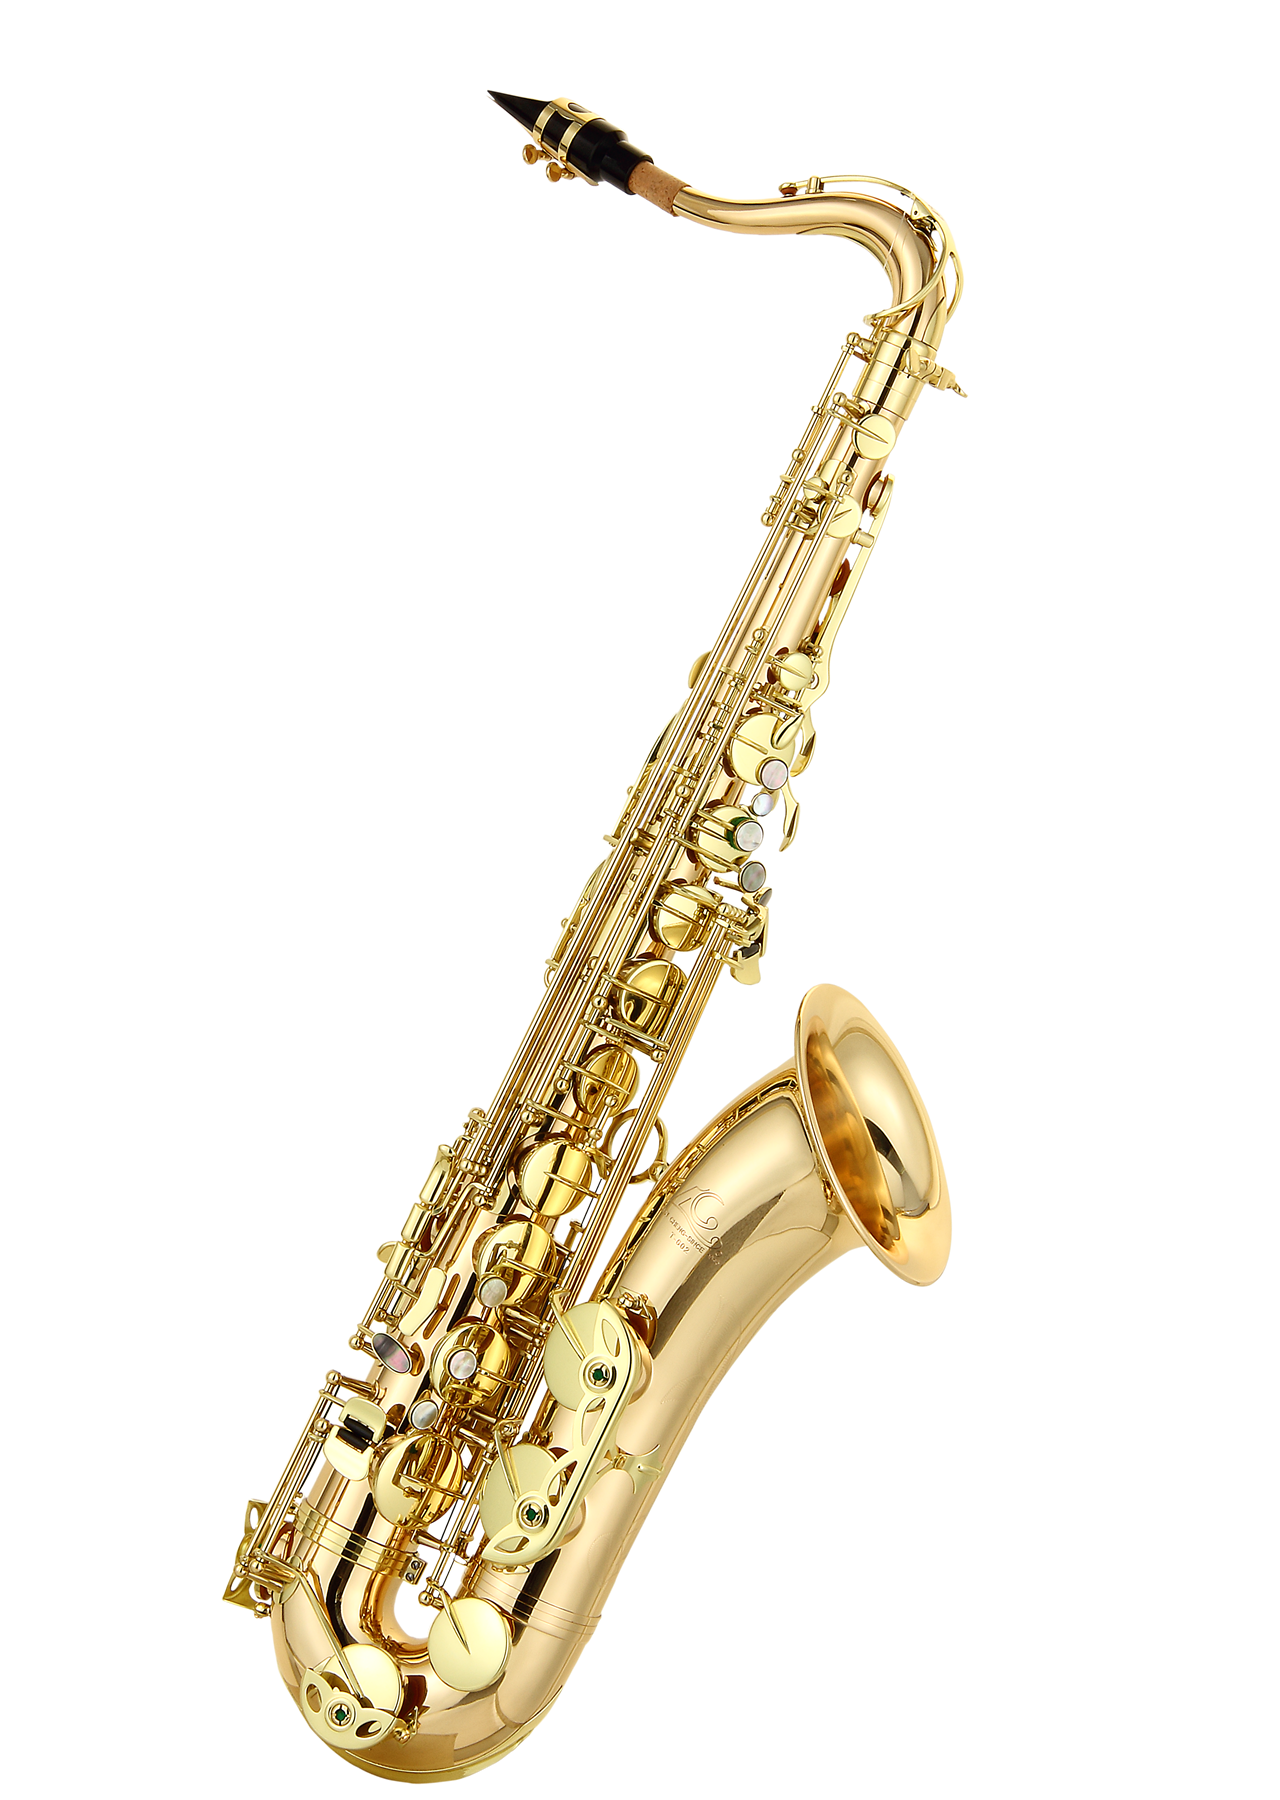 Golden Saxophoneon Black Background PNG image